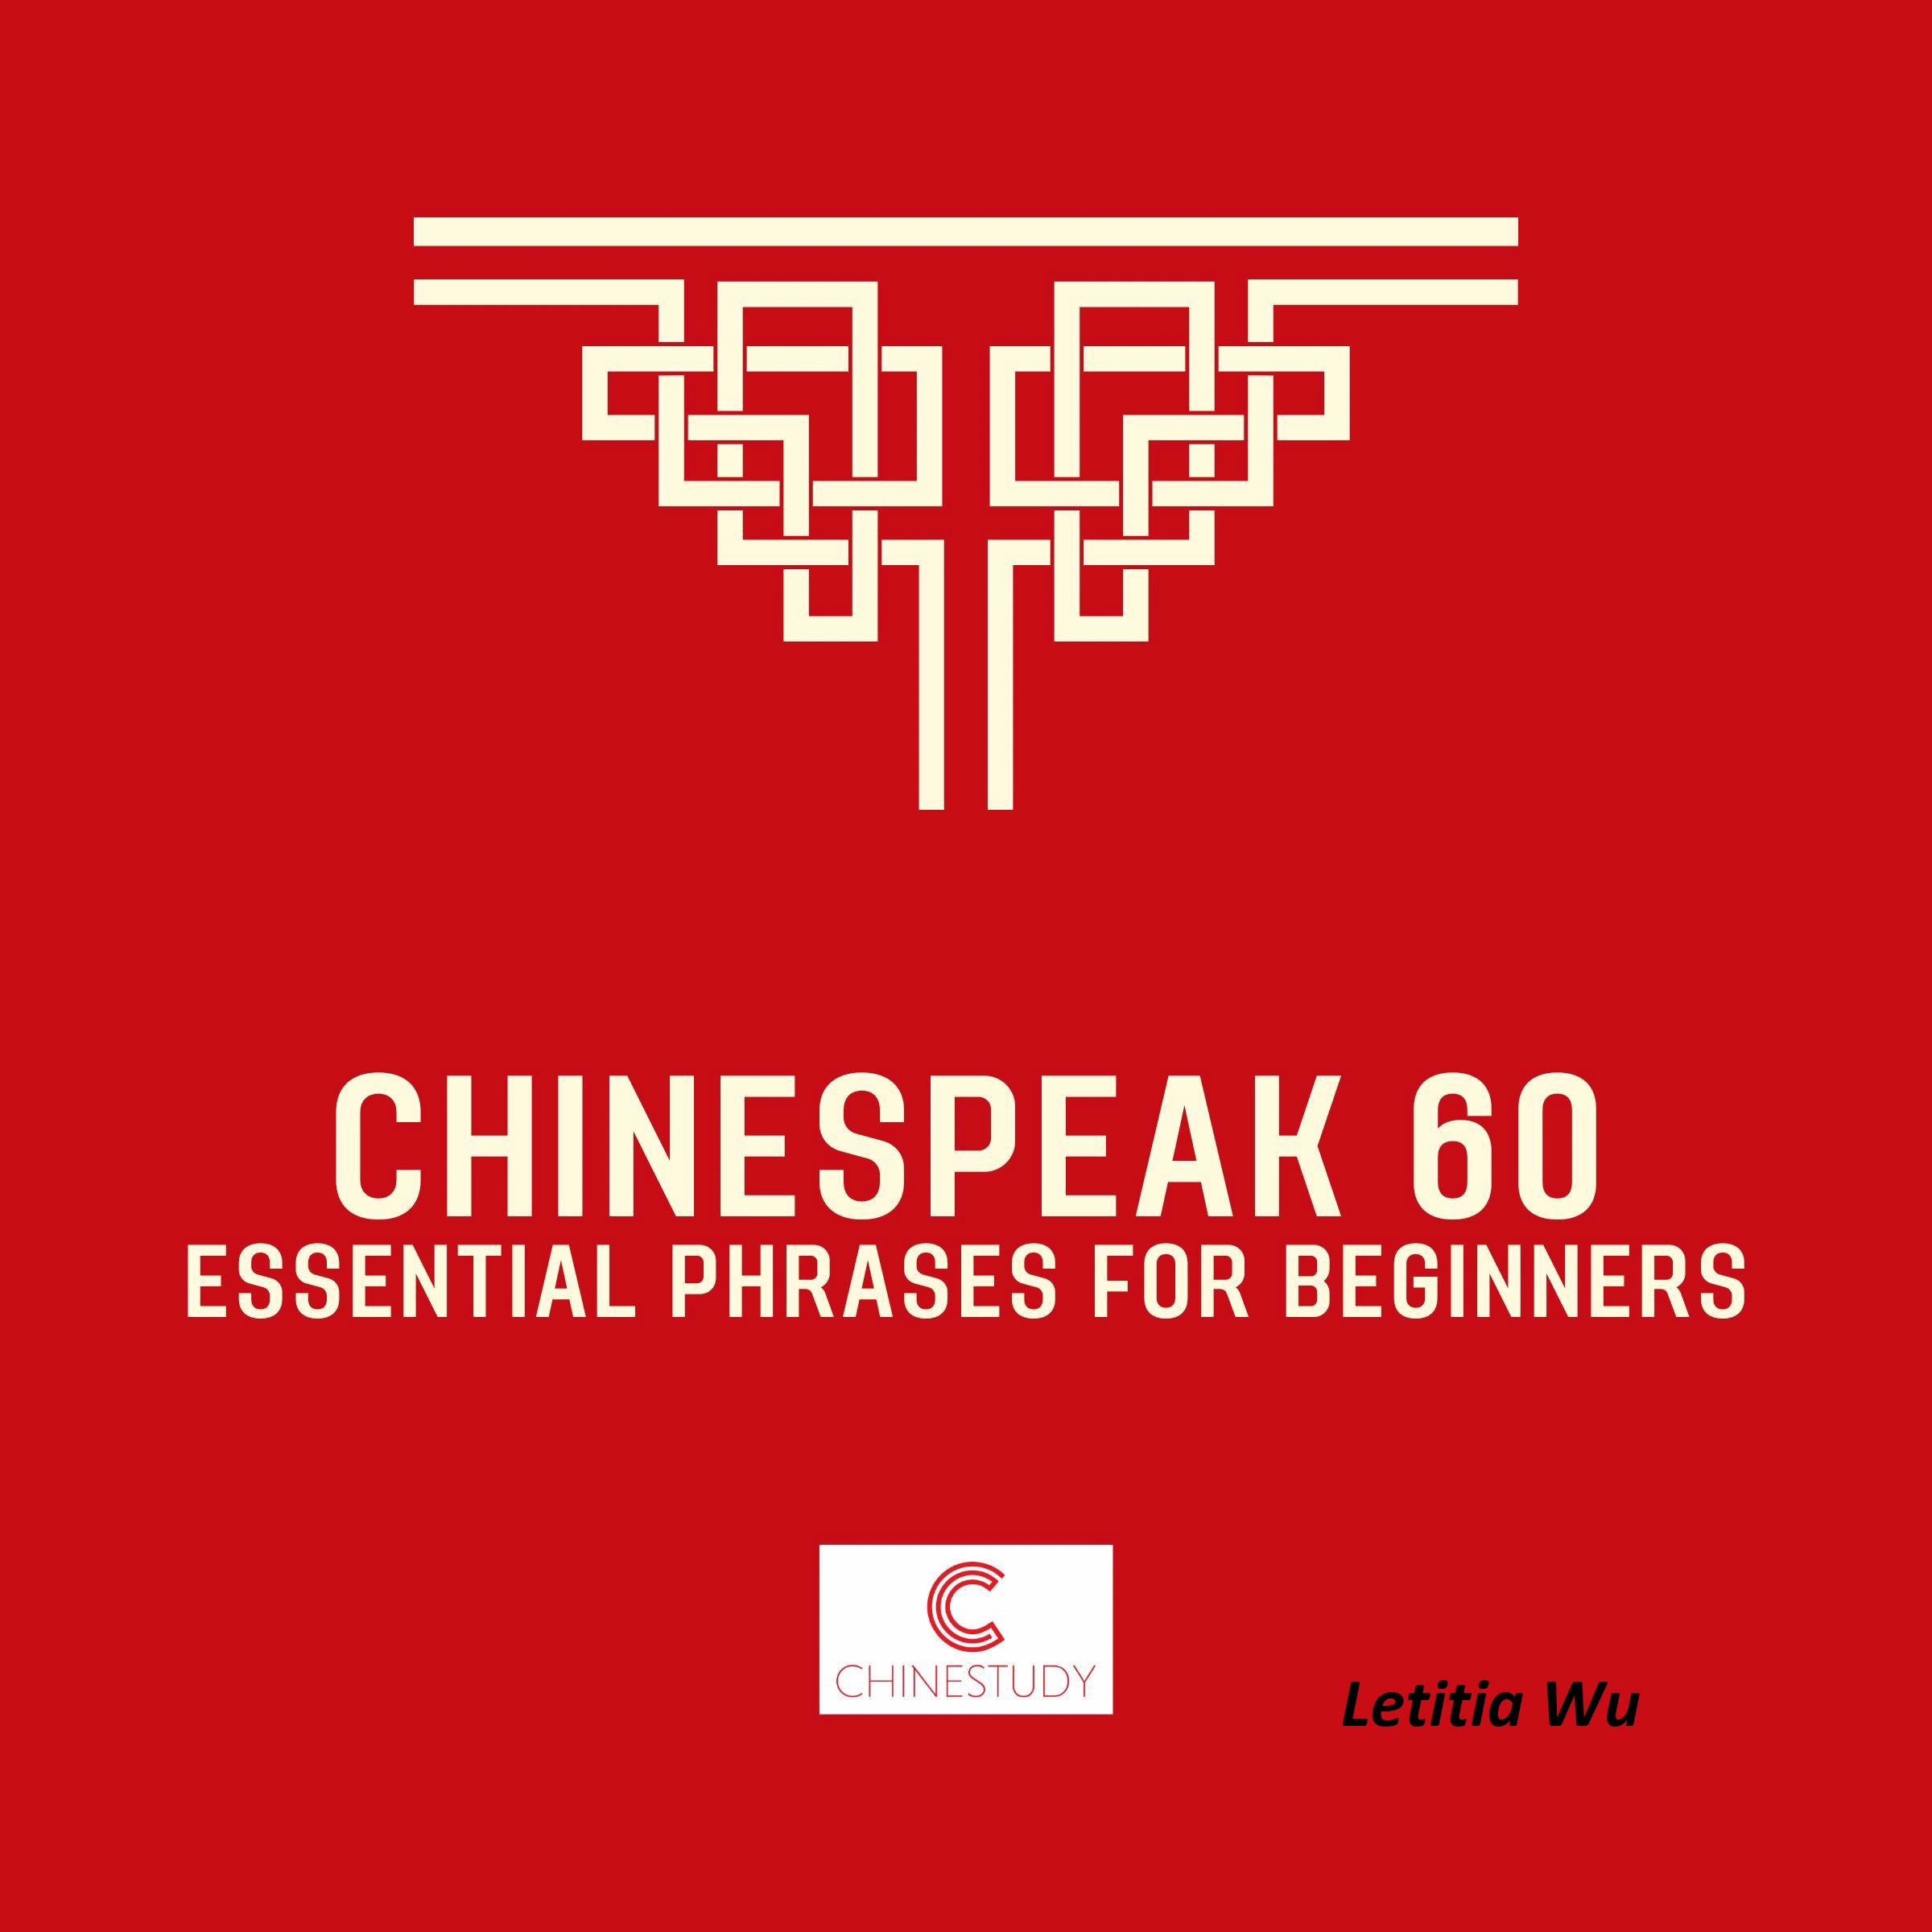 Chinespeak 60 Audiobook by Letitia Wu